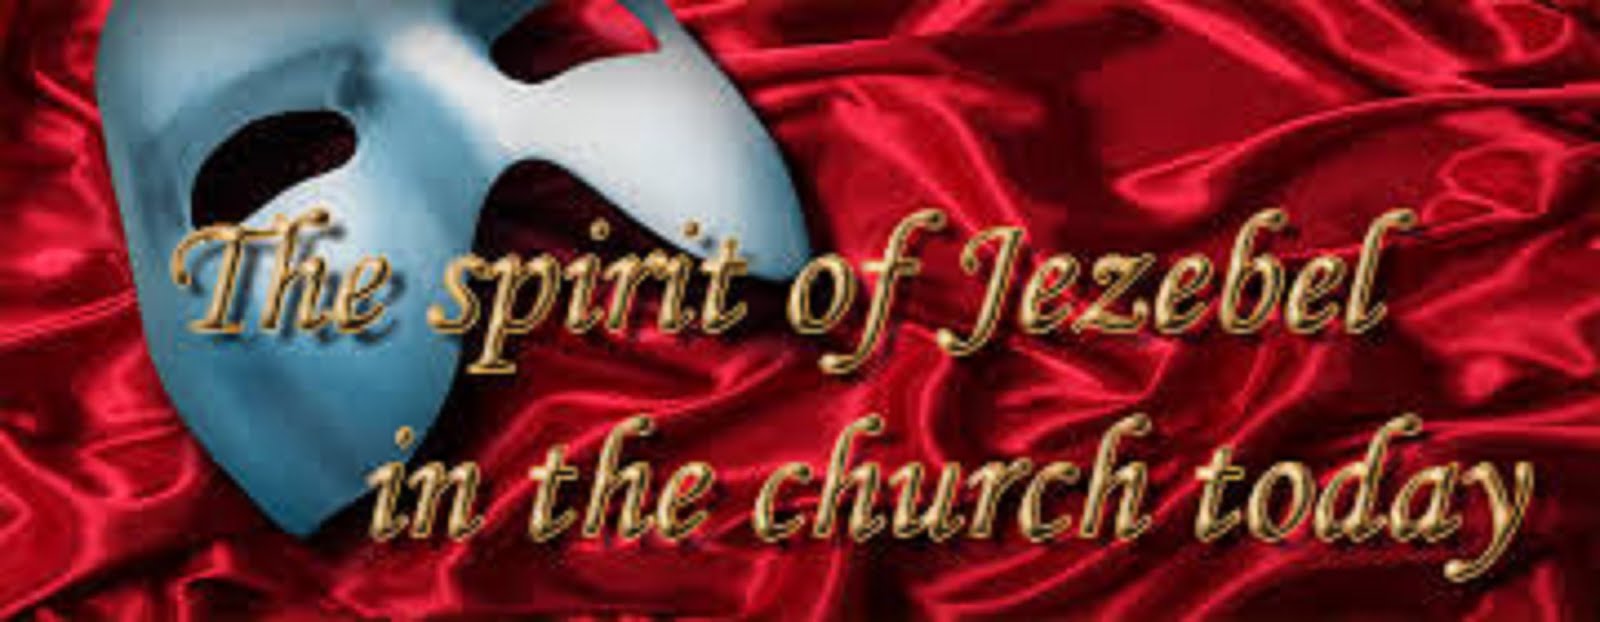 THE SPIRIT OF JEZEBEL IN THE SPIRIT TODAY